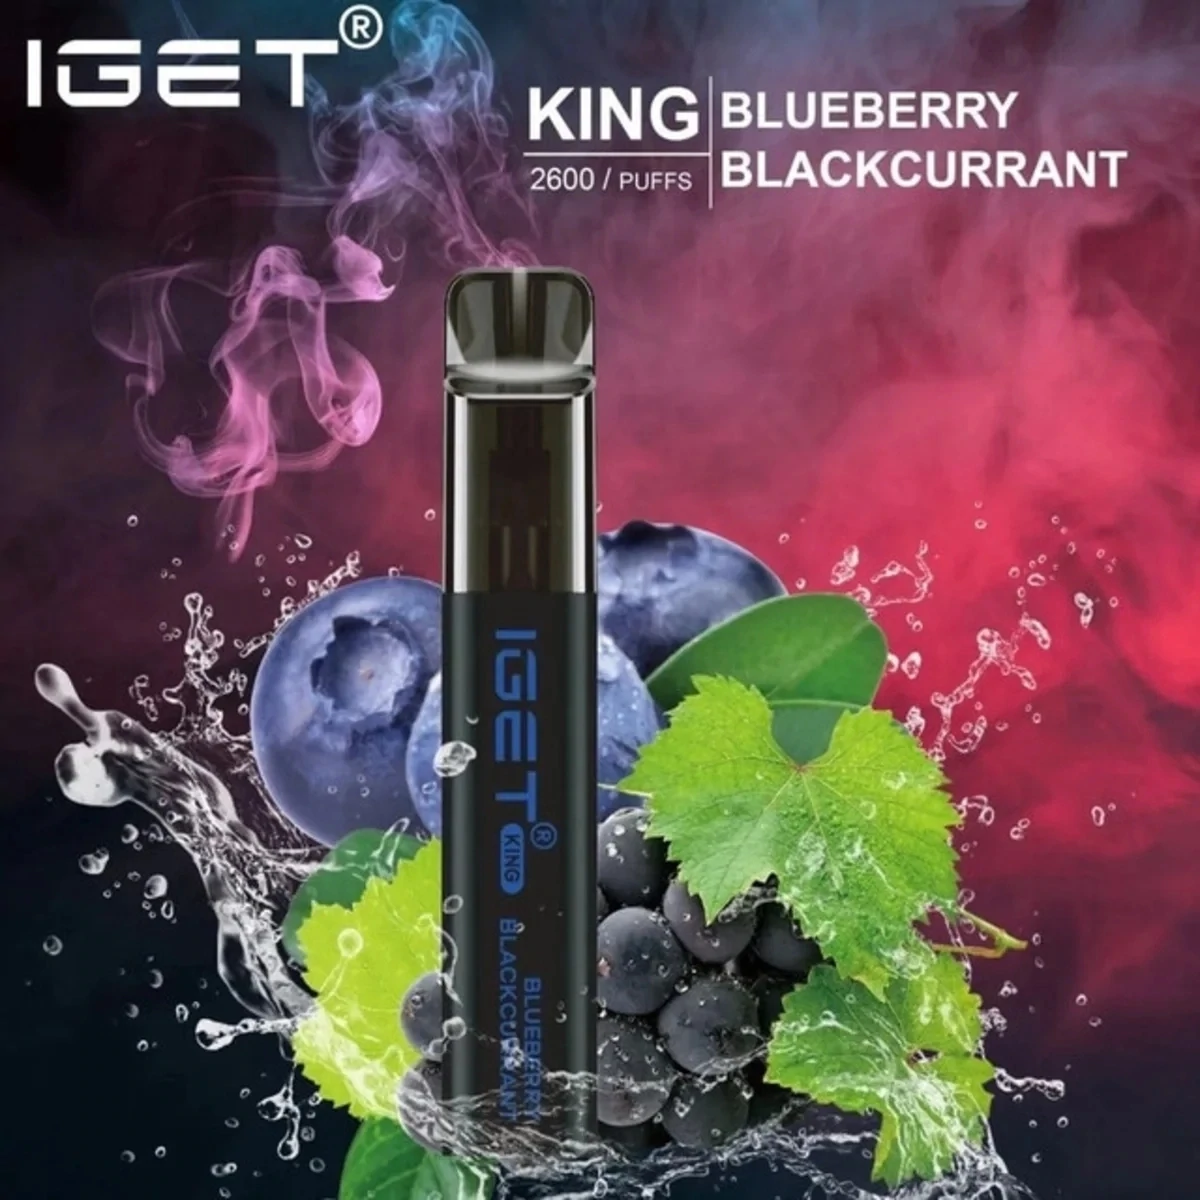 IGET king Blueberry Blackcurrant 2600